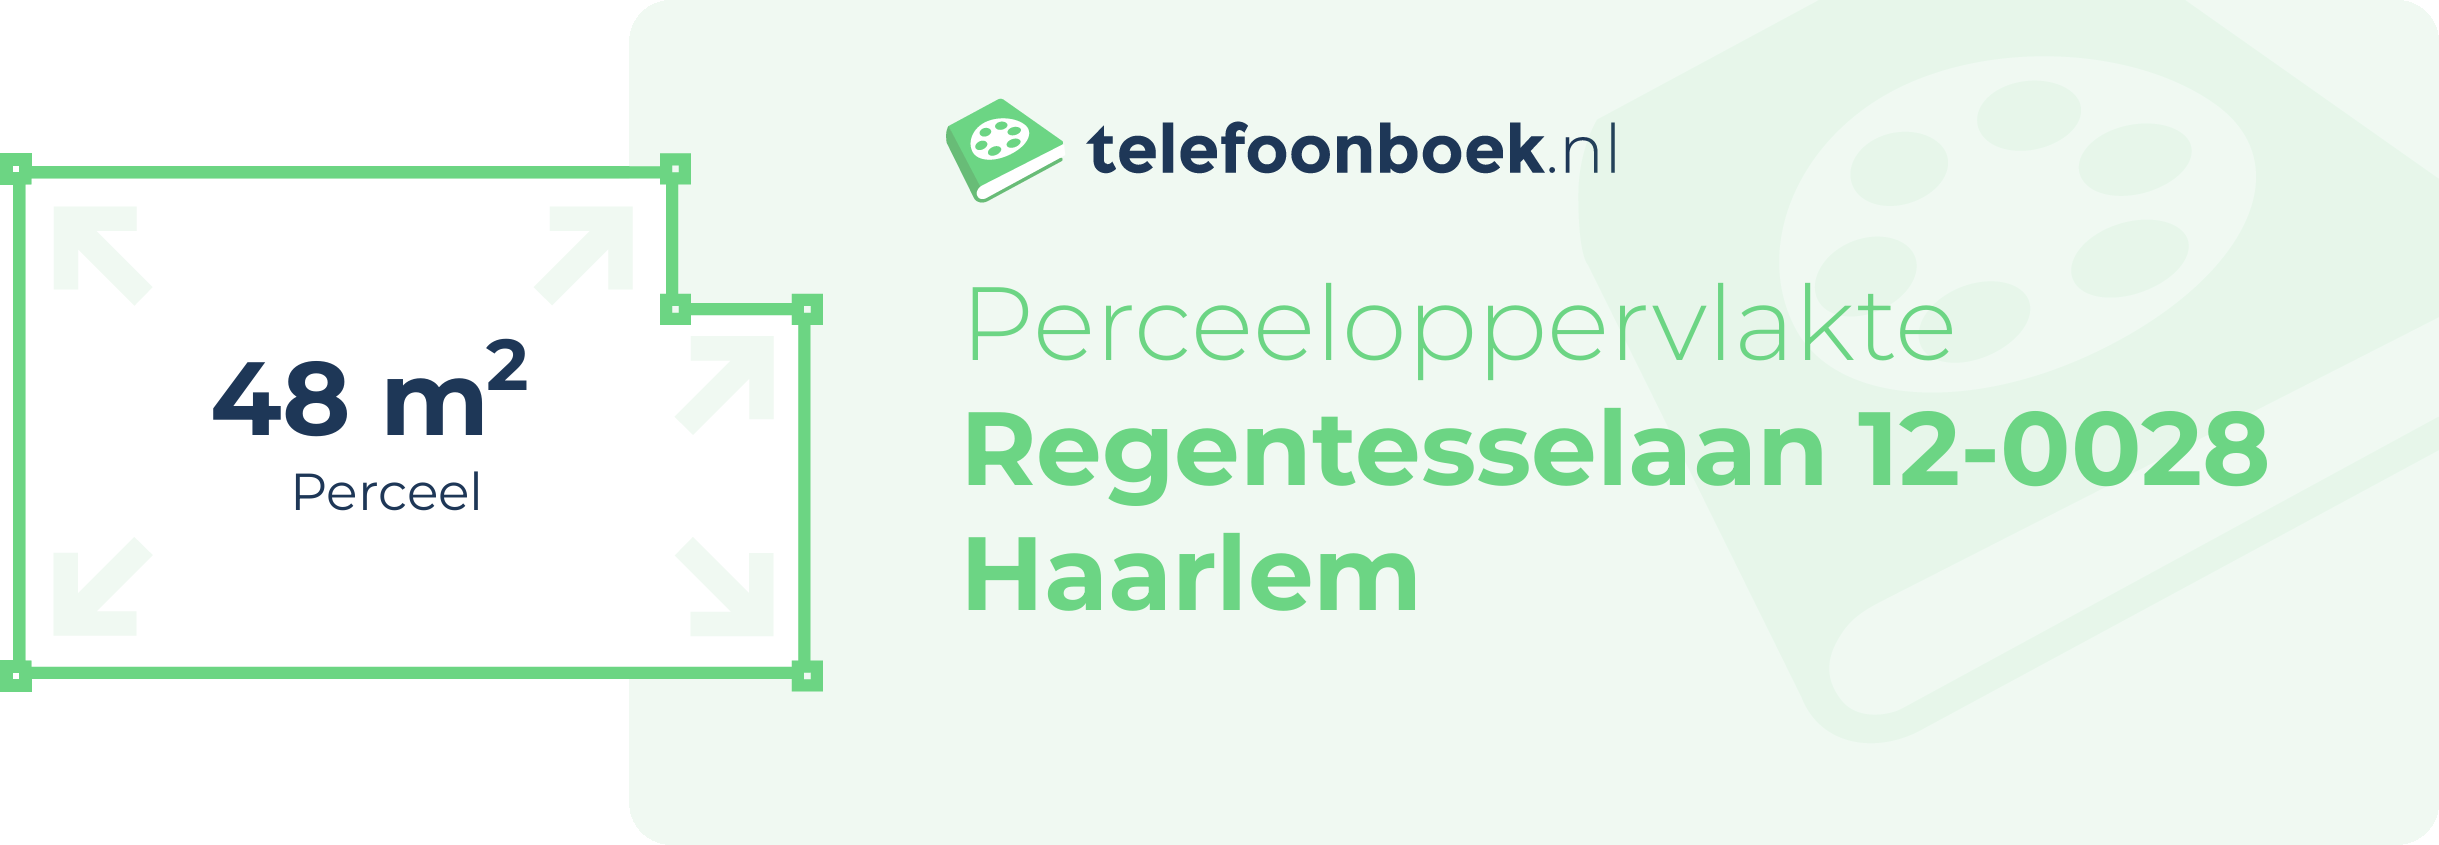 Perceeloppervlakte Regentesselaan 12-0028 Haarlem